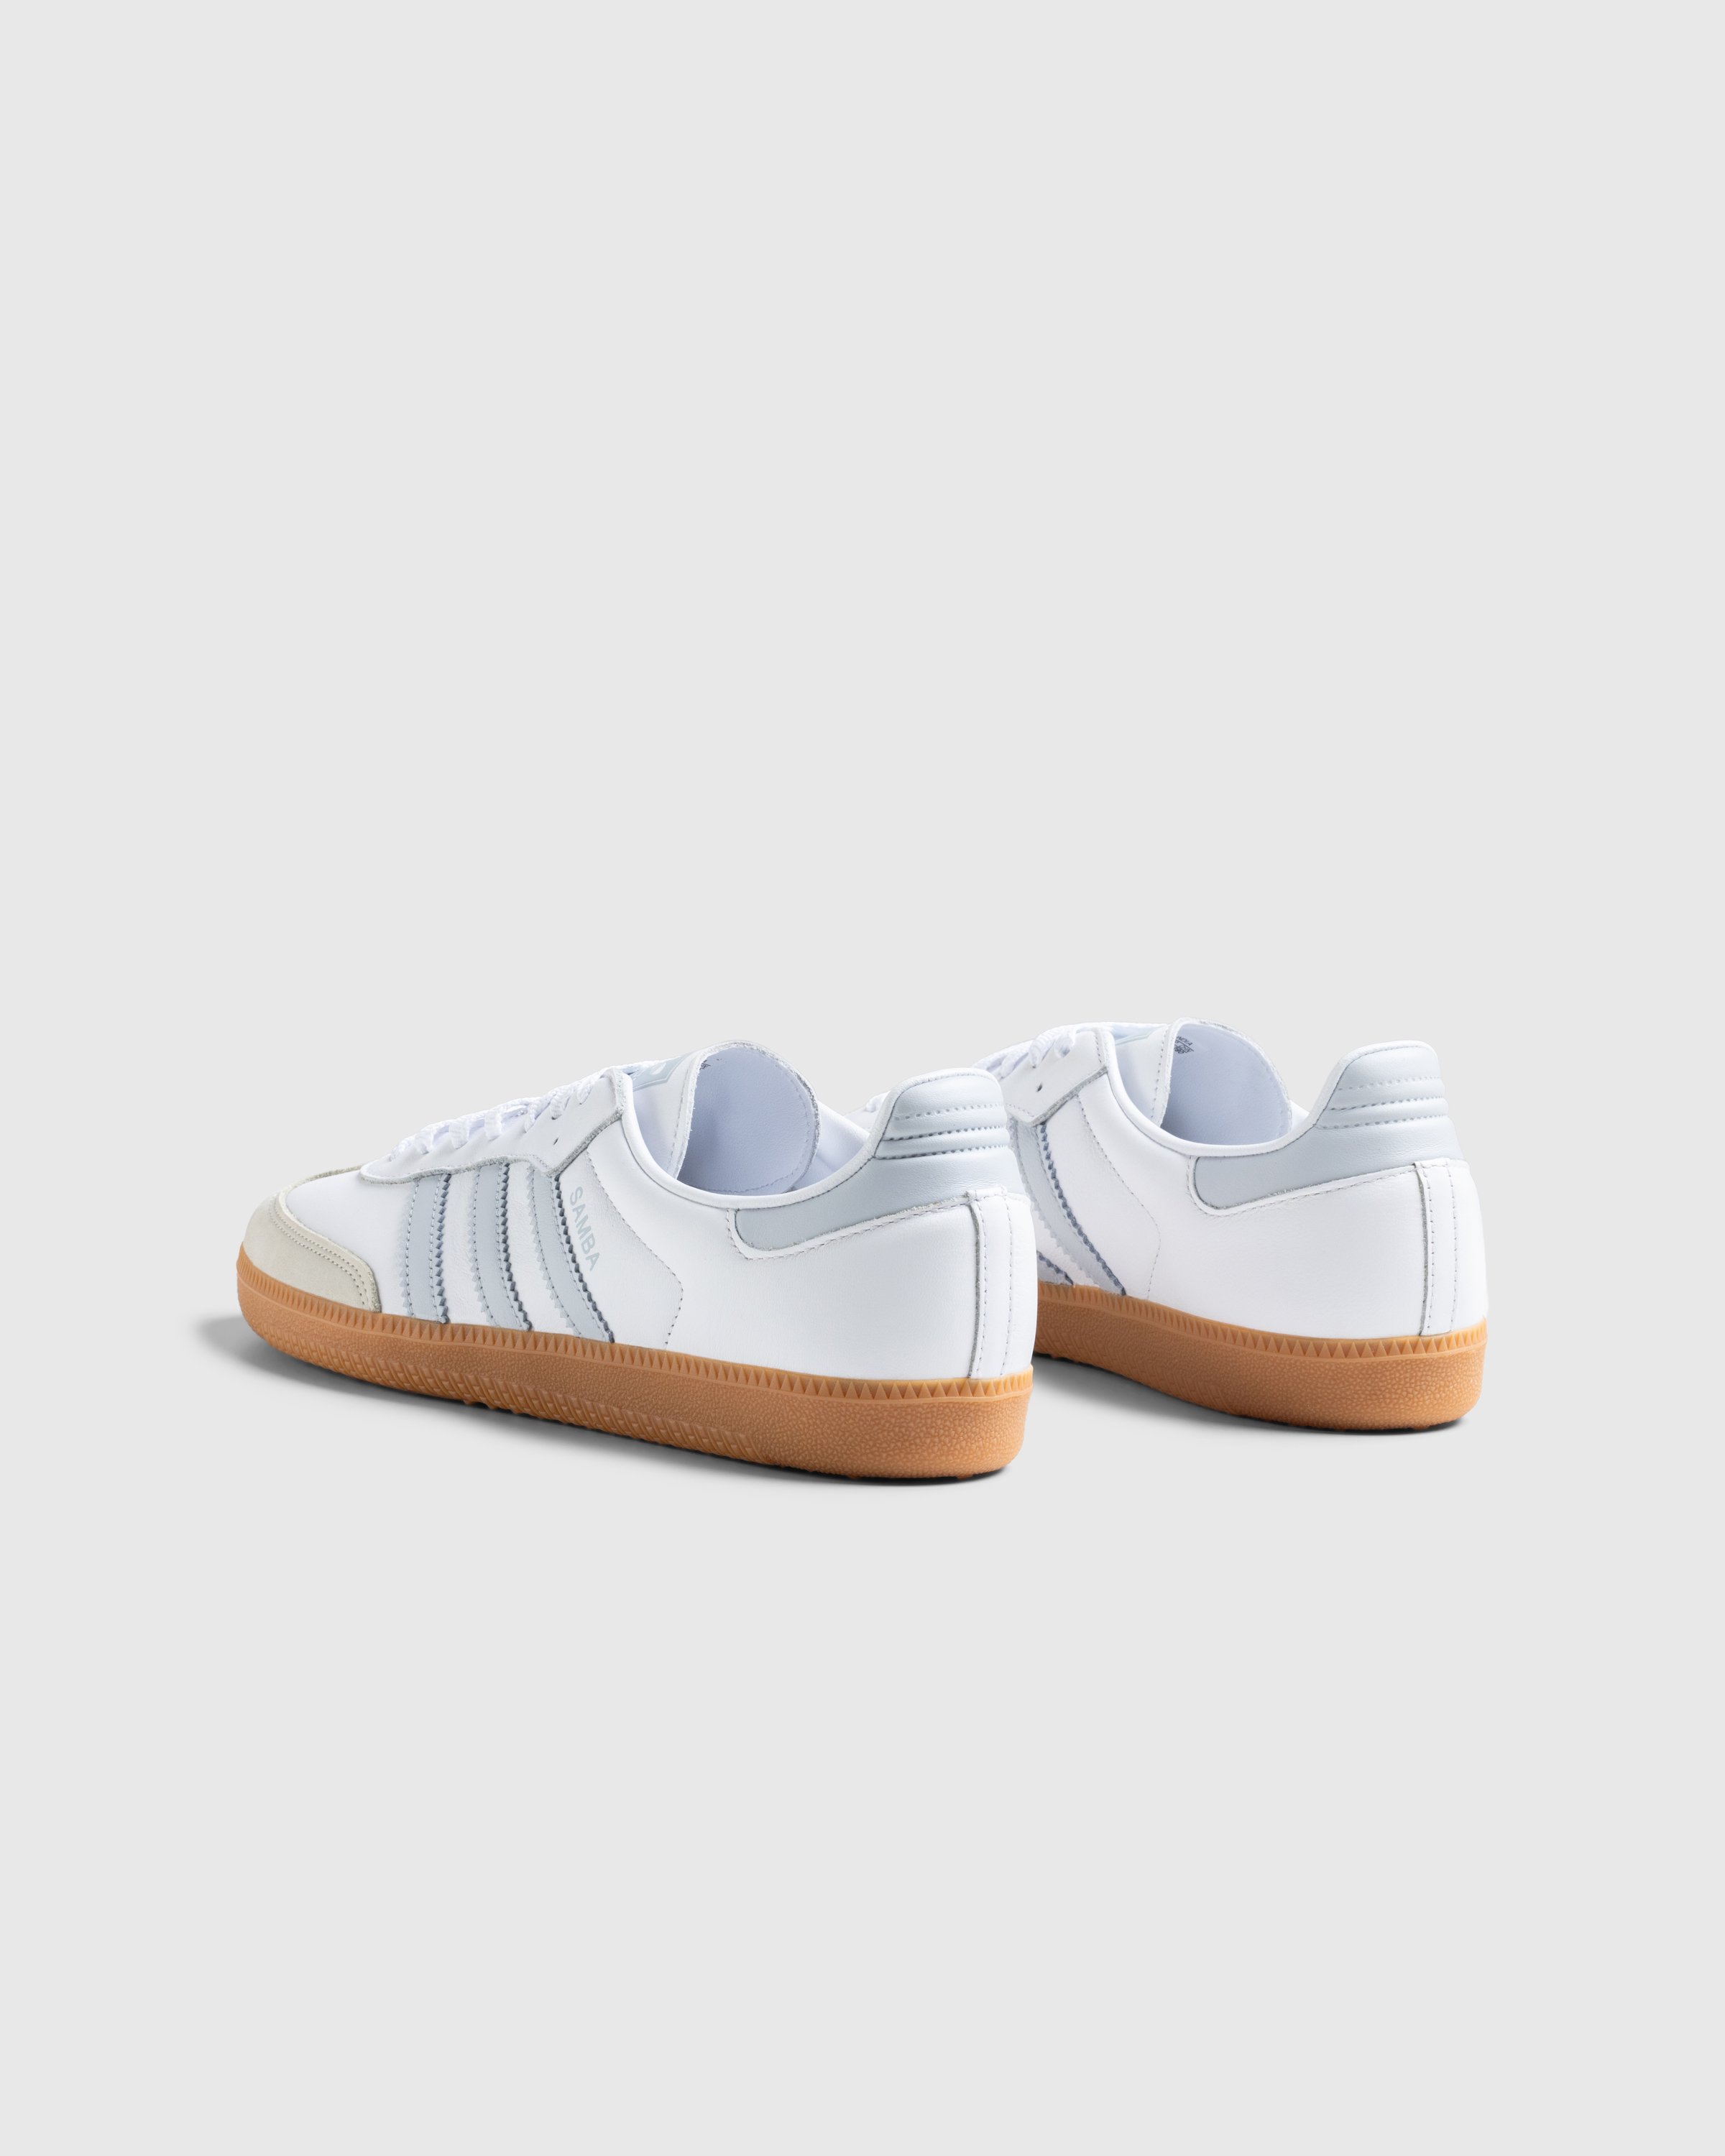 Adidas - Samba Og W          Ftwwht/Halblu/Owhite - Footwear - White - Image 4